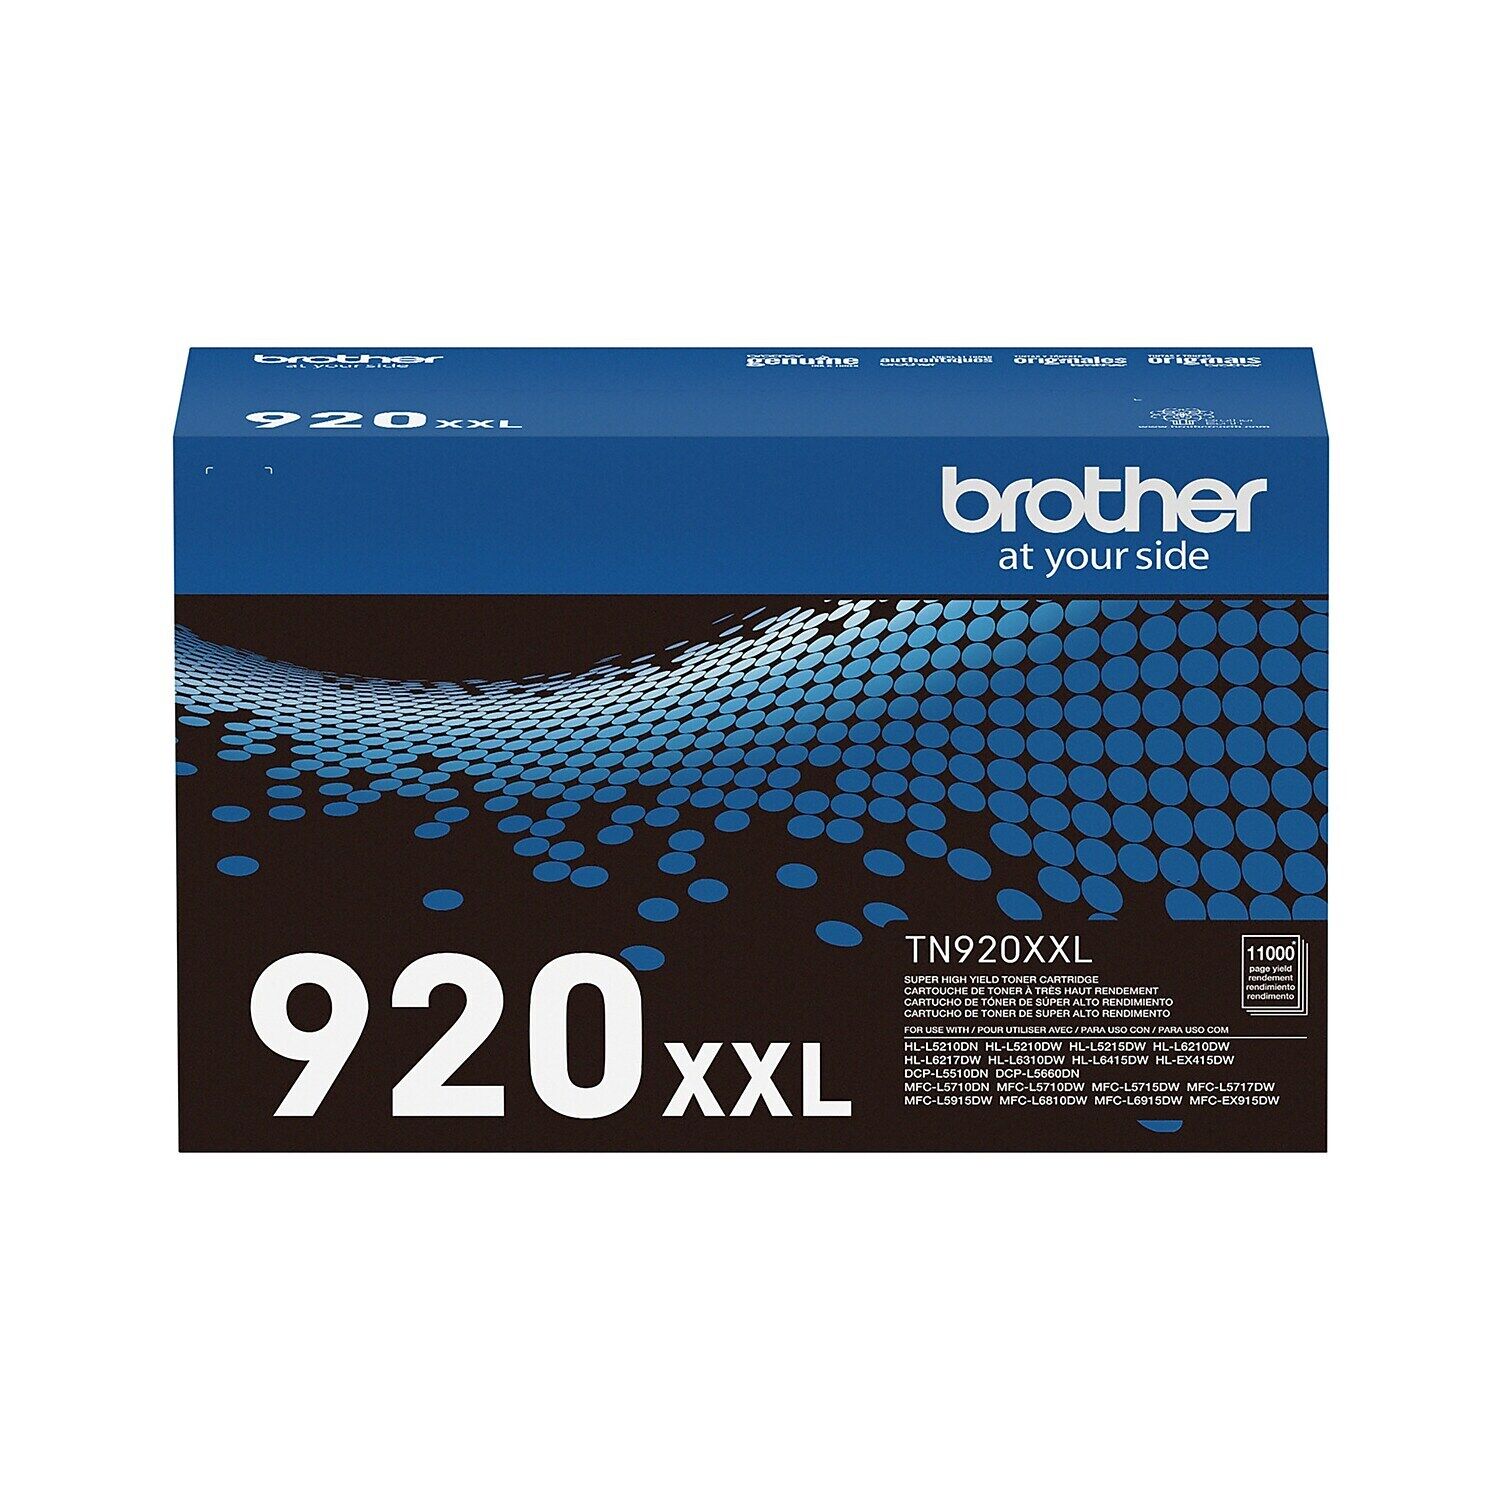 Brother TN920XXL Black Super High Yield Toner Cartridge